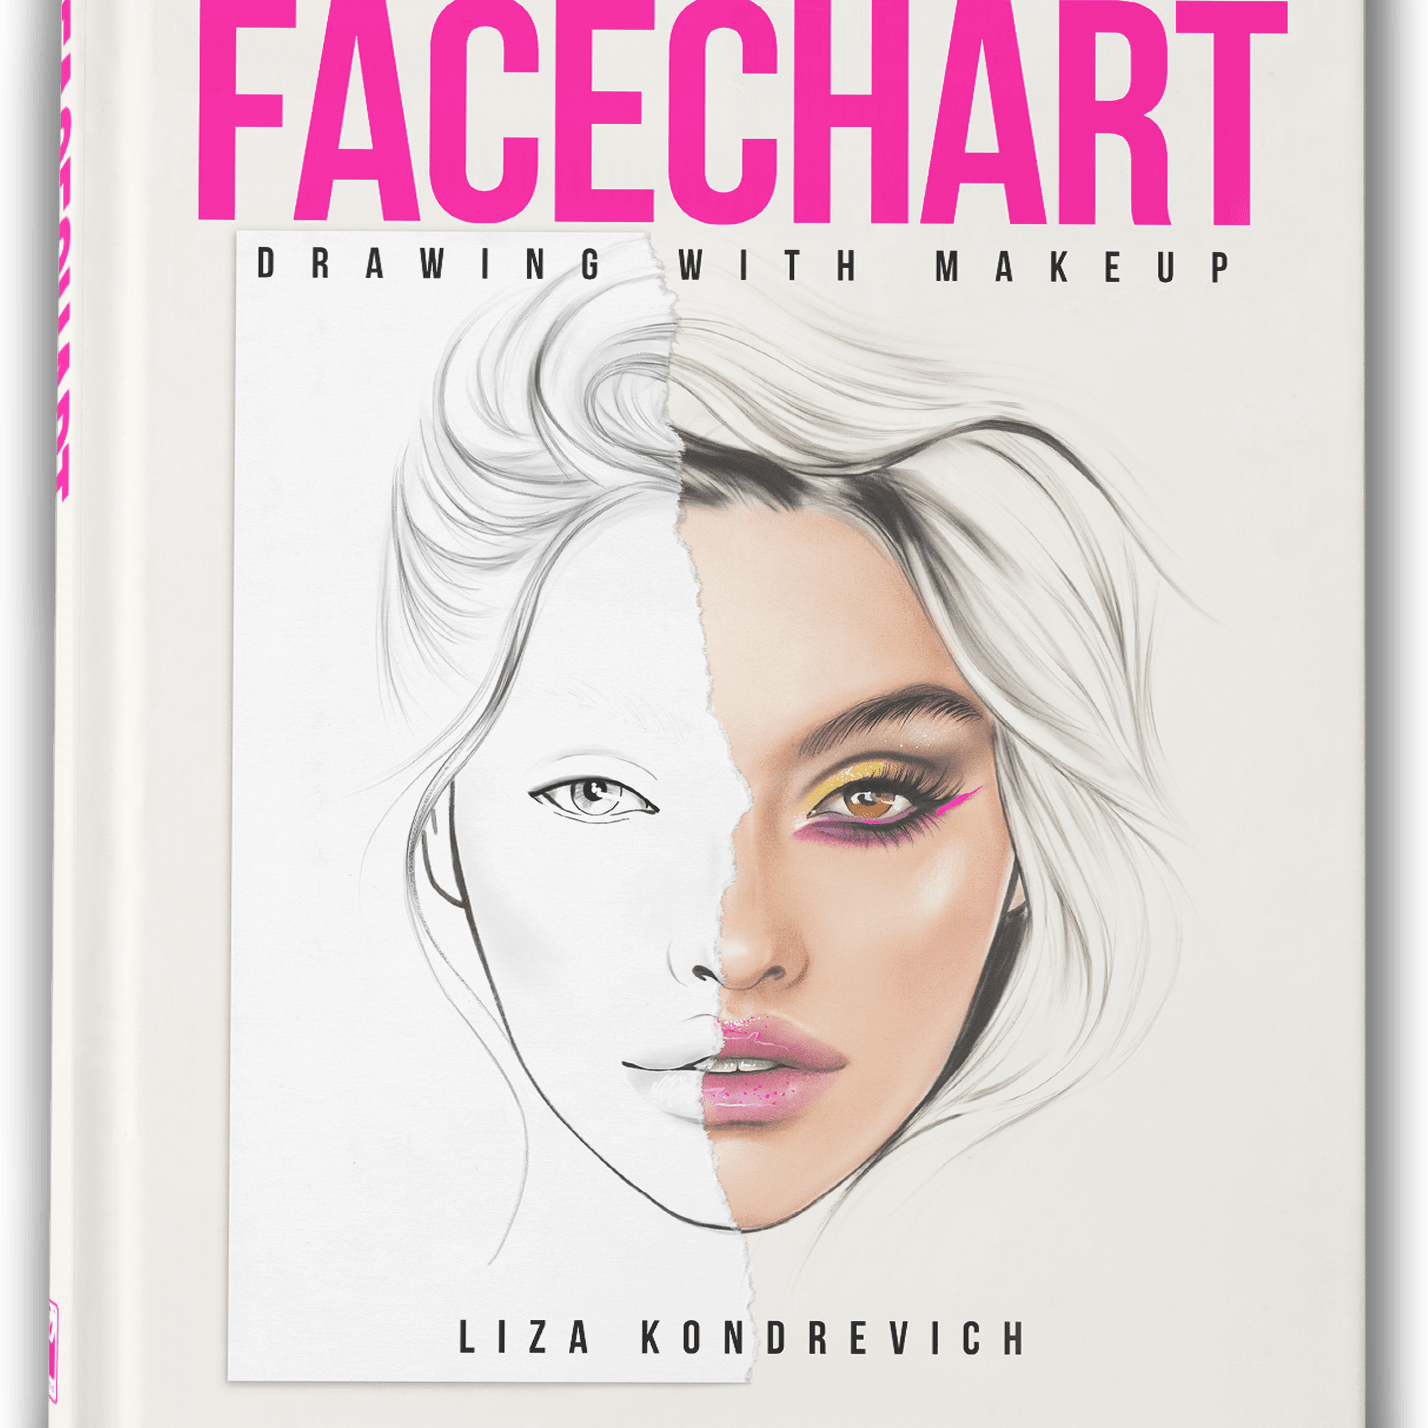 Face chart the book, facechart book, by liza kondrevich